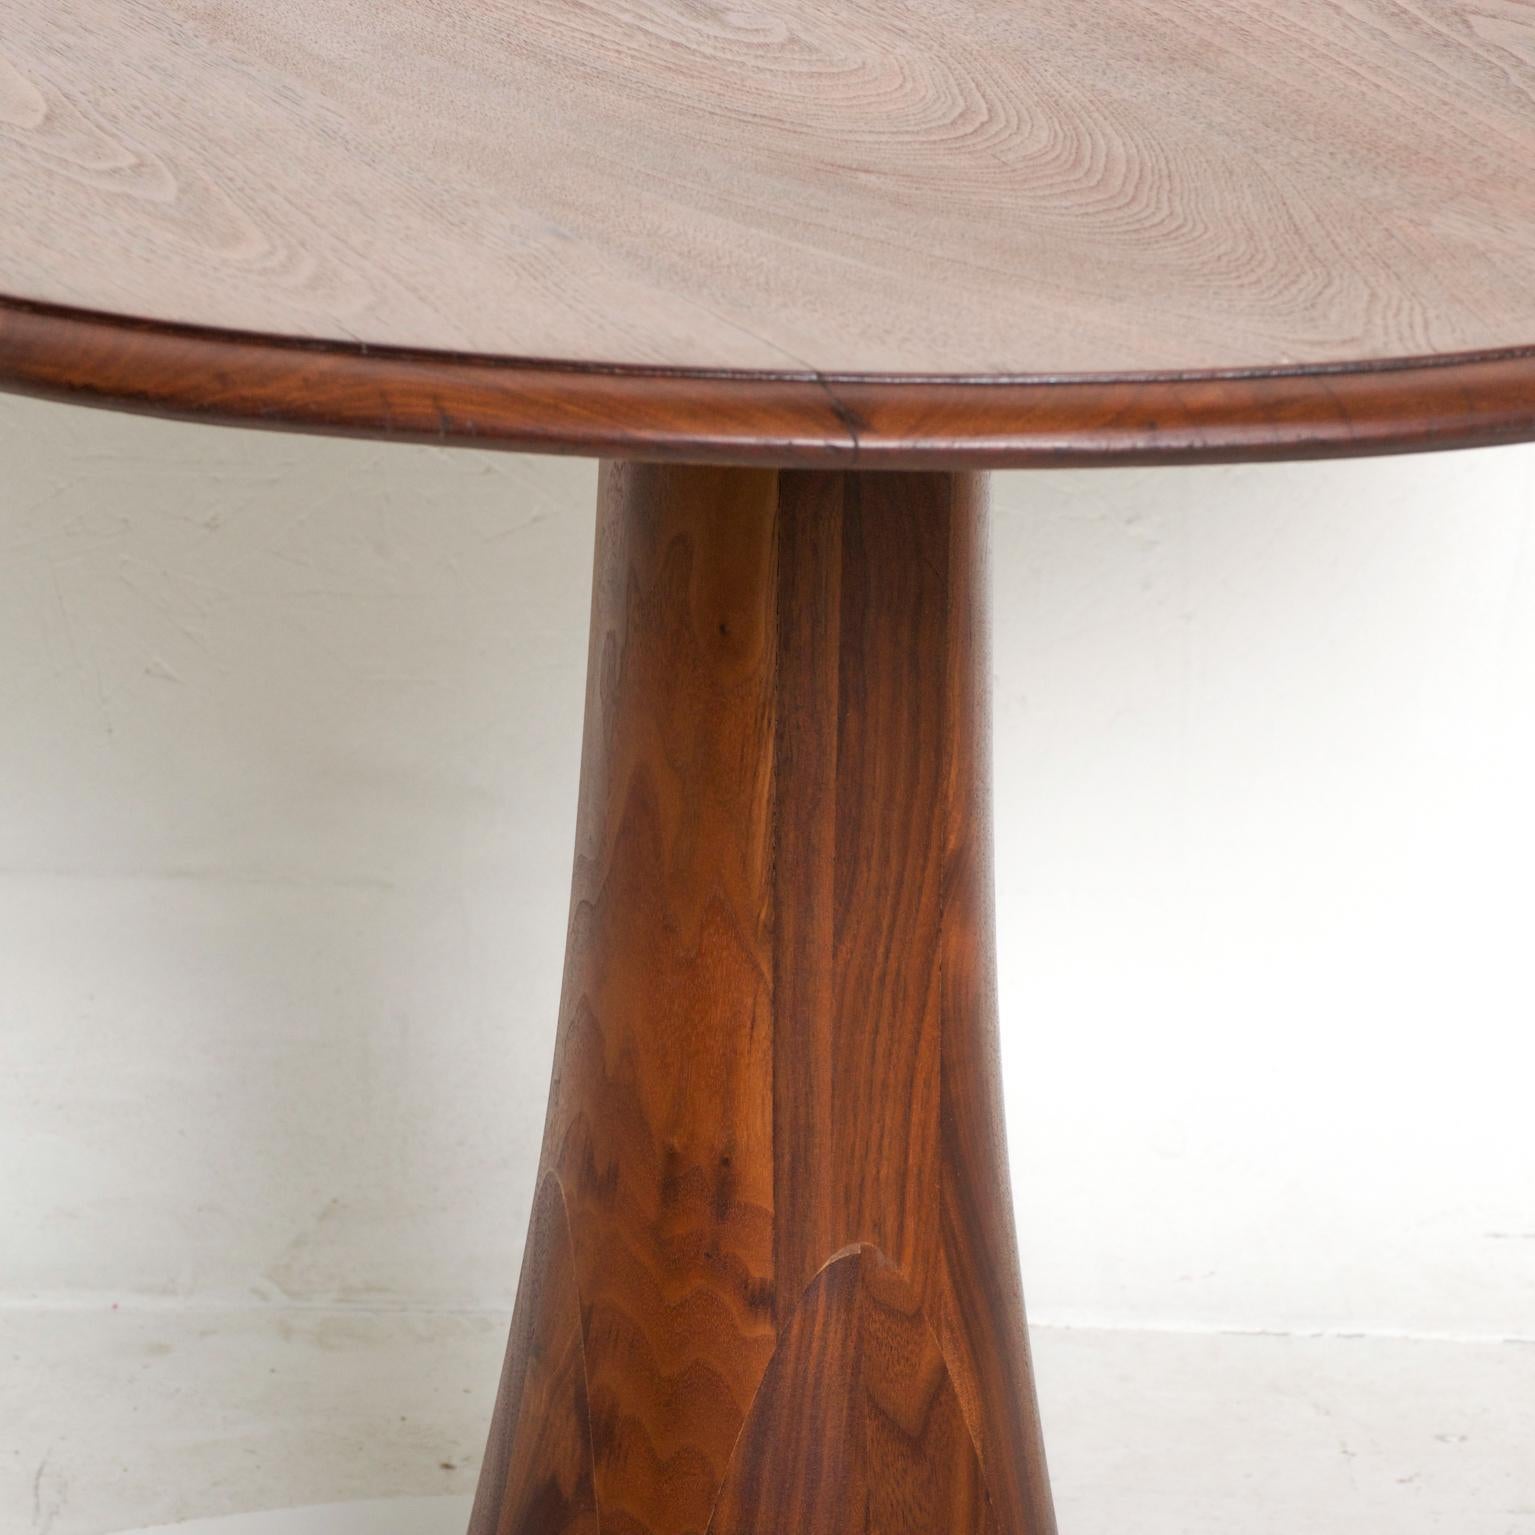 American Solid Walnut Sculptural Round Table Mid-Century Modern Period